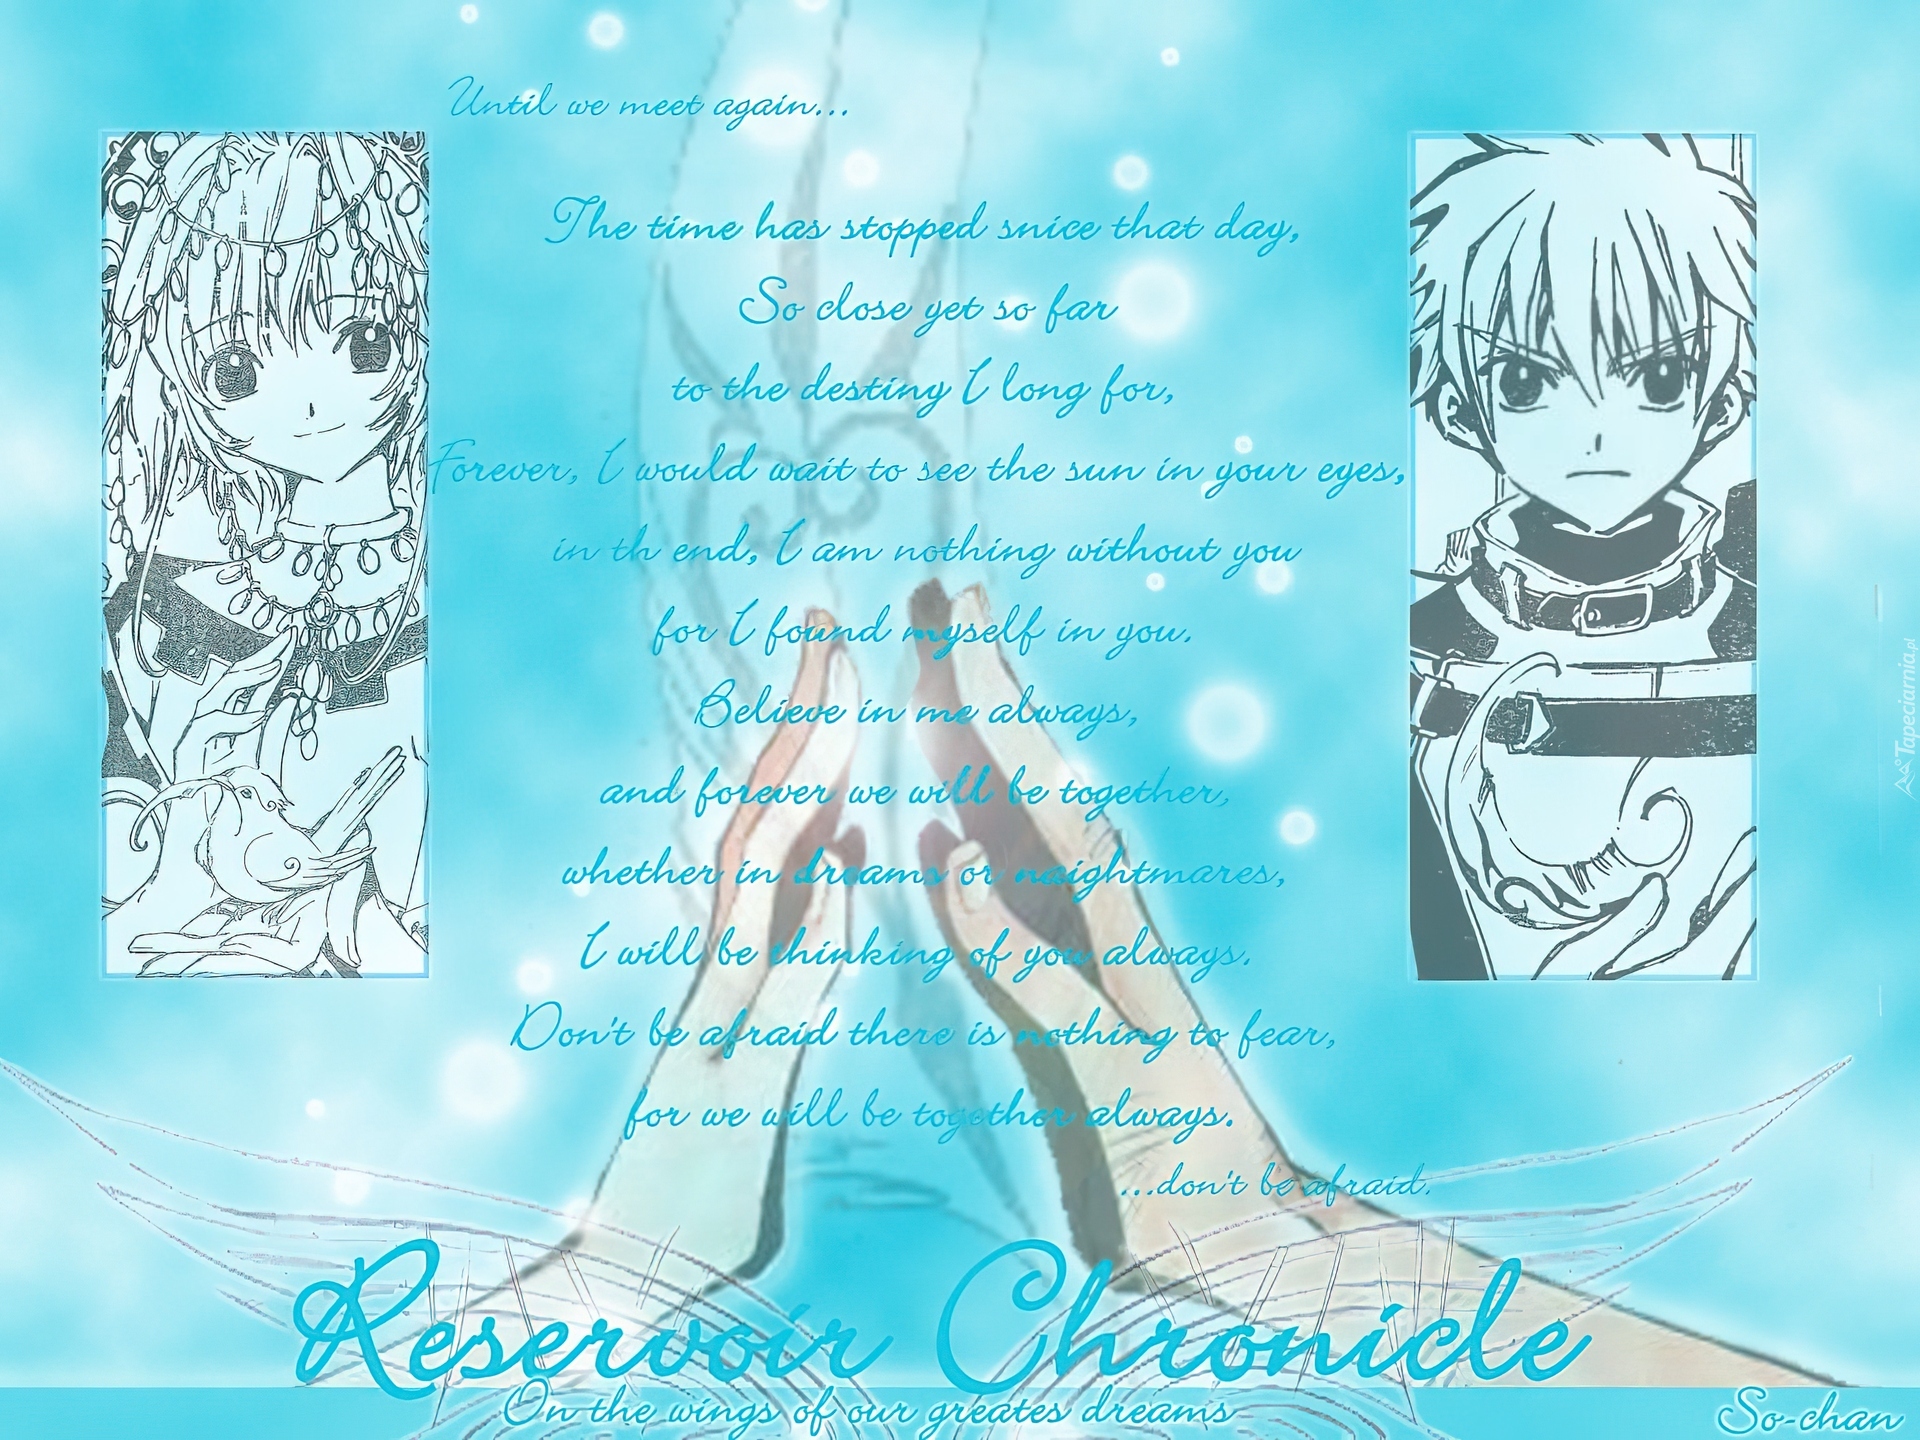 Tsubasa Reservoir Chronicles, dłonie, napisy, postacie